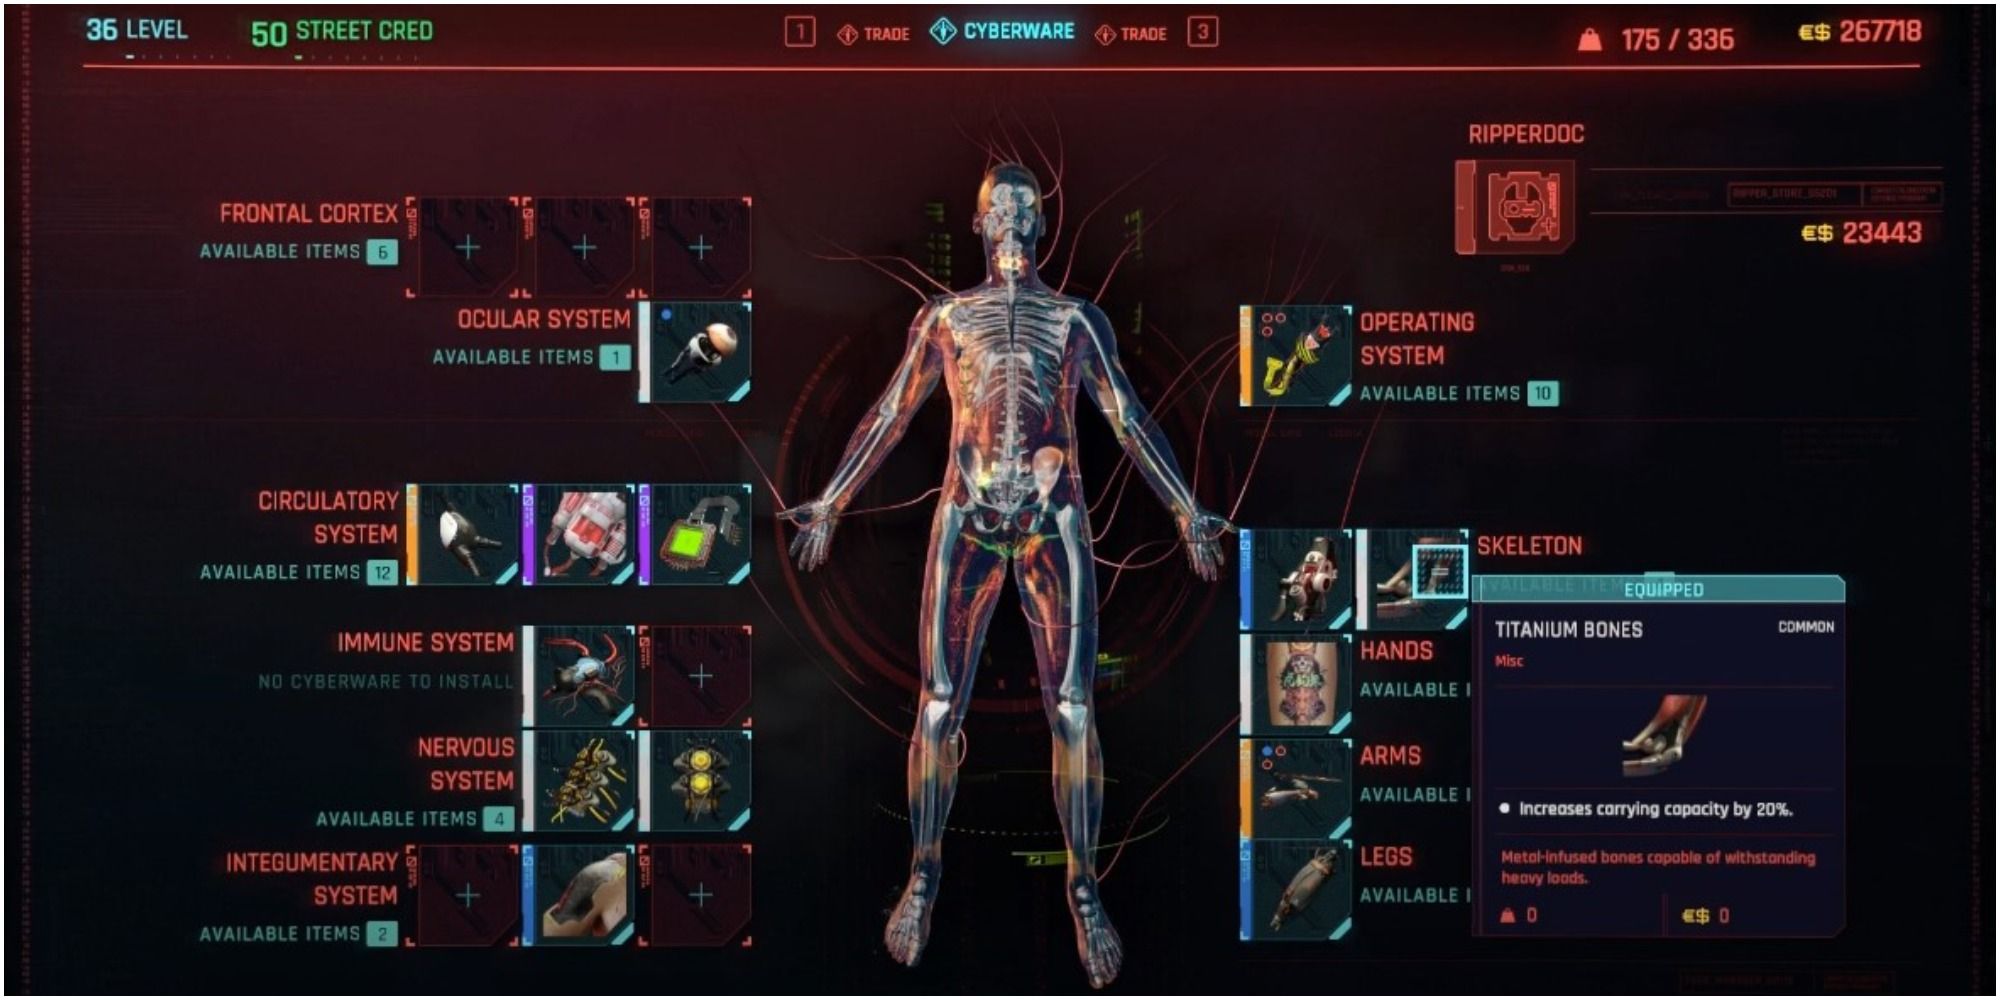 Cyberpunk 2077 Looking At Titanium Bones As An Upgrade Option